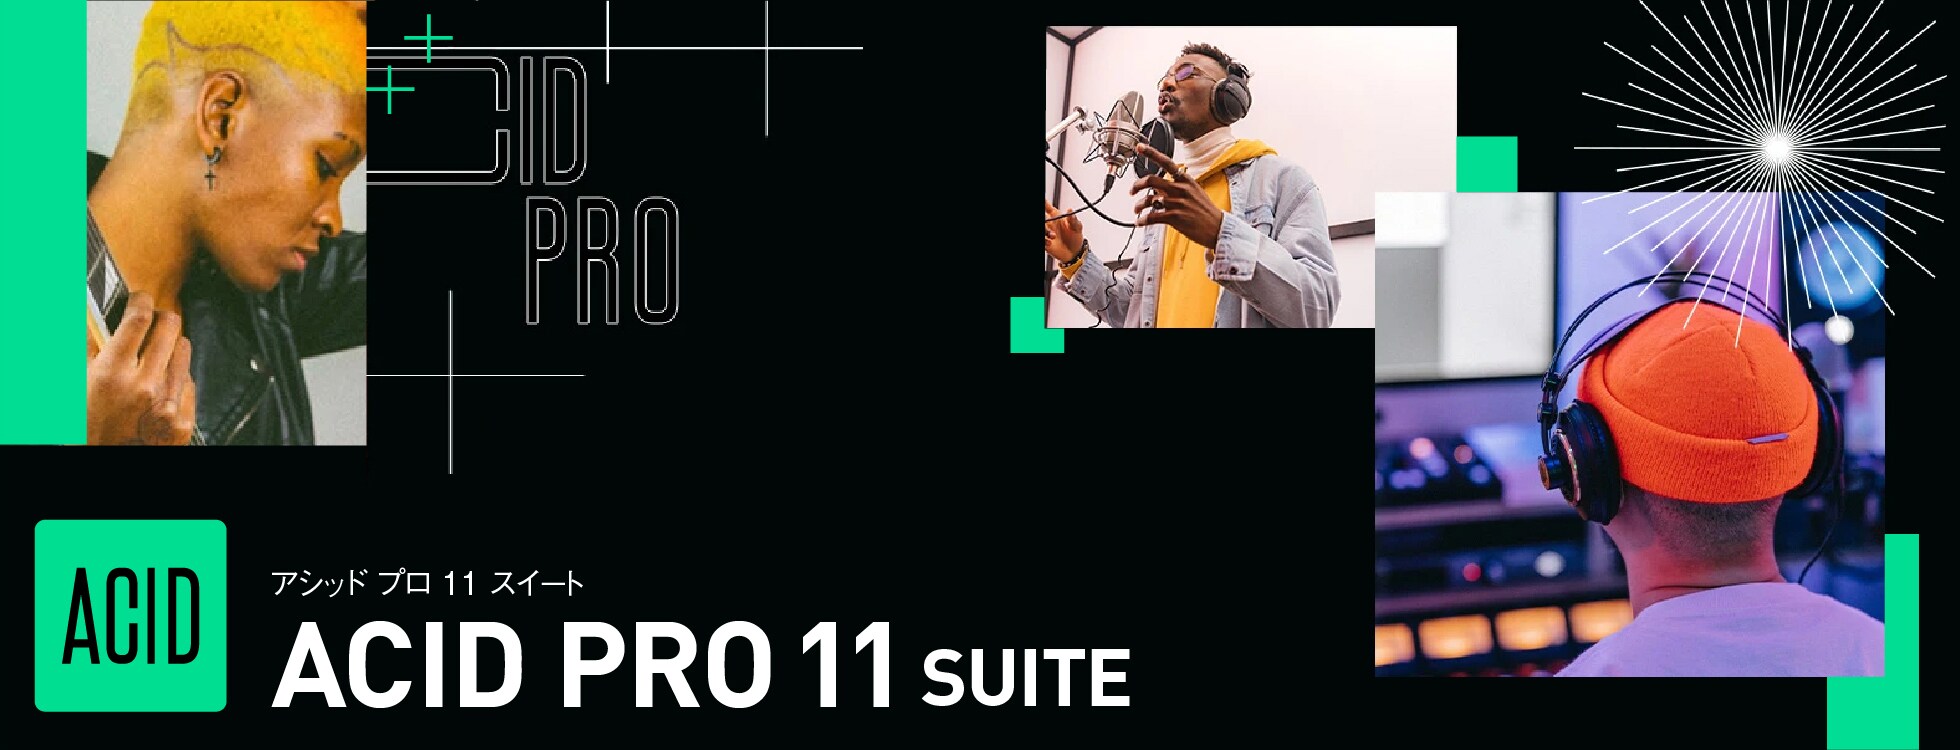 ACID Pro 11 Suite - プロの作曲ソフト